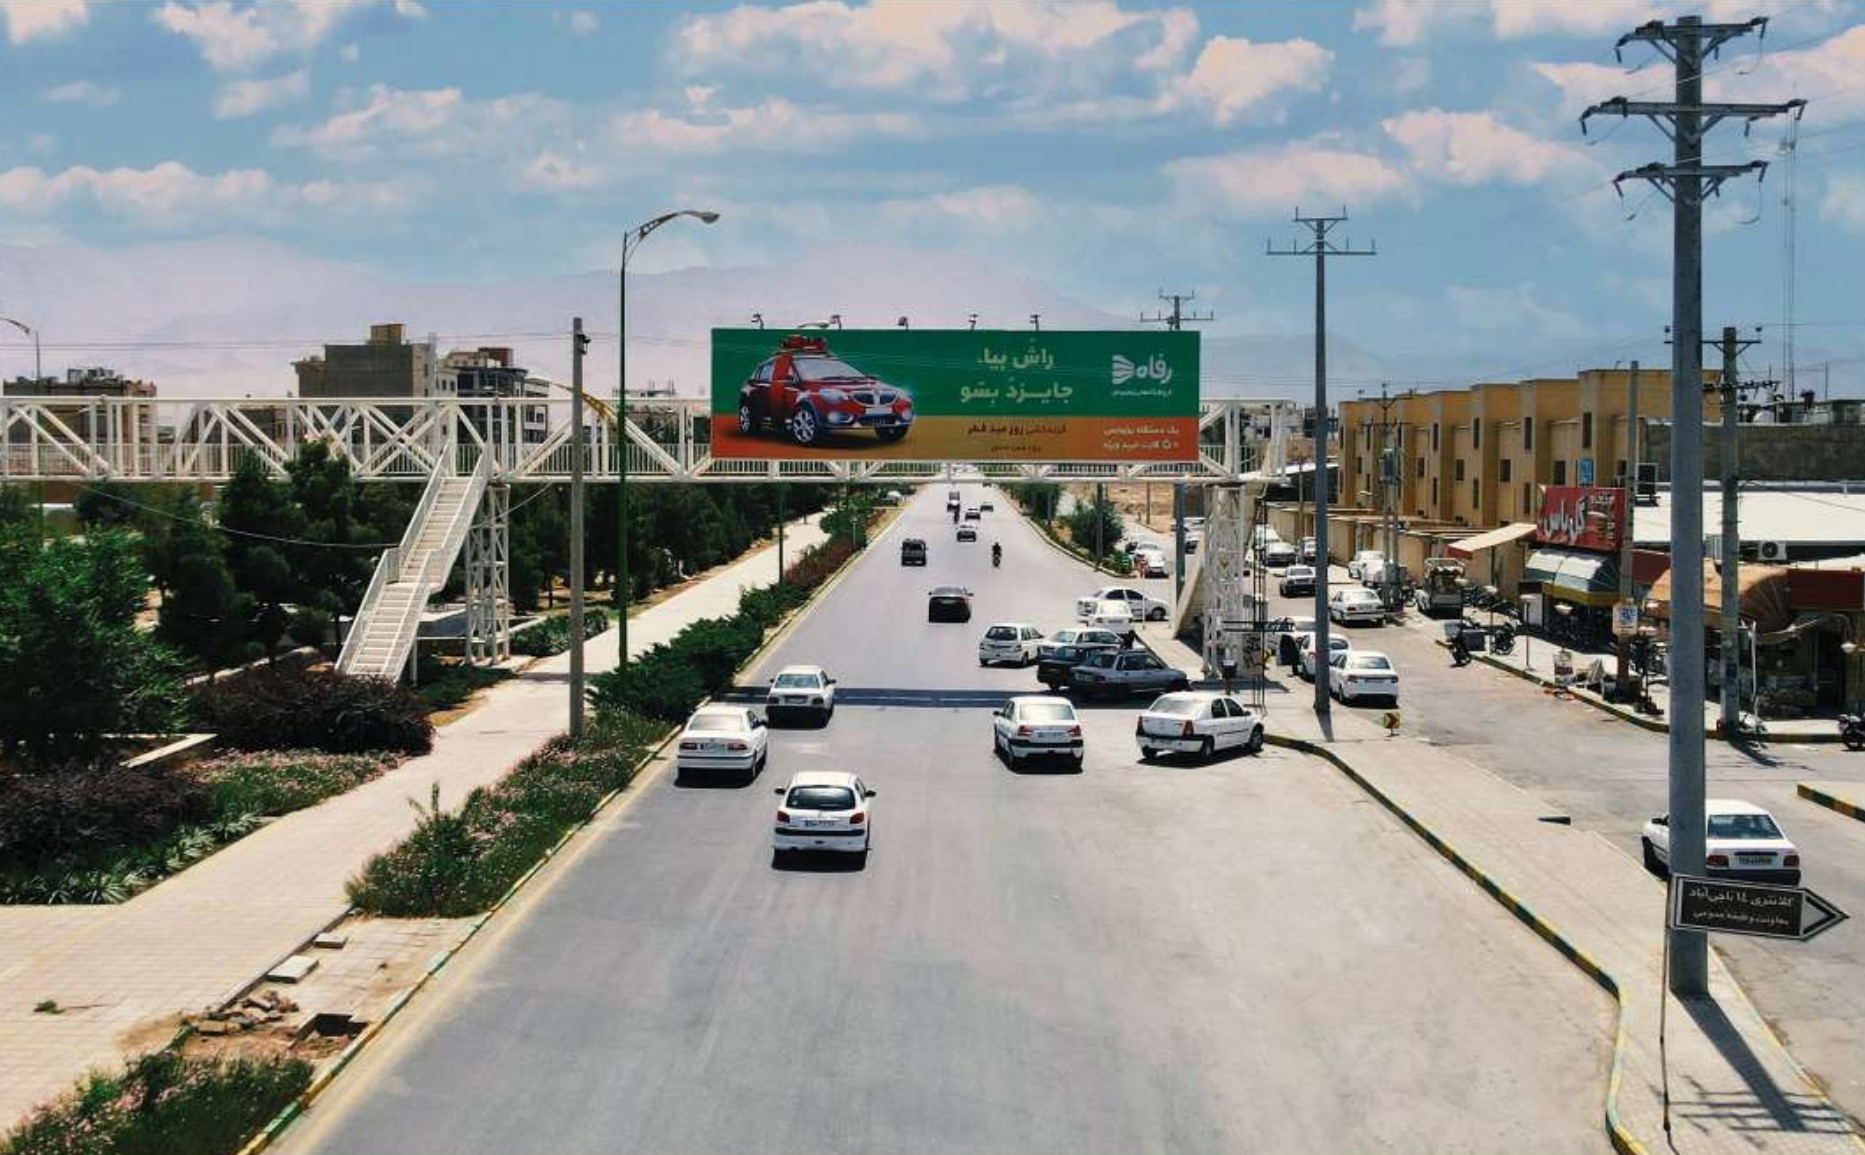 پل عابرپیاده بلوار امام رضا(ع)، مقابل مرکز خرید گل یاس